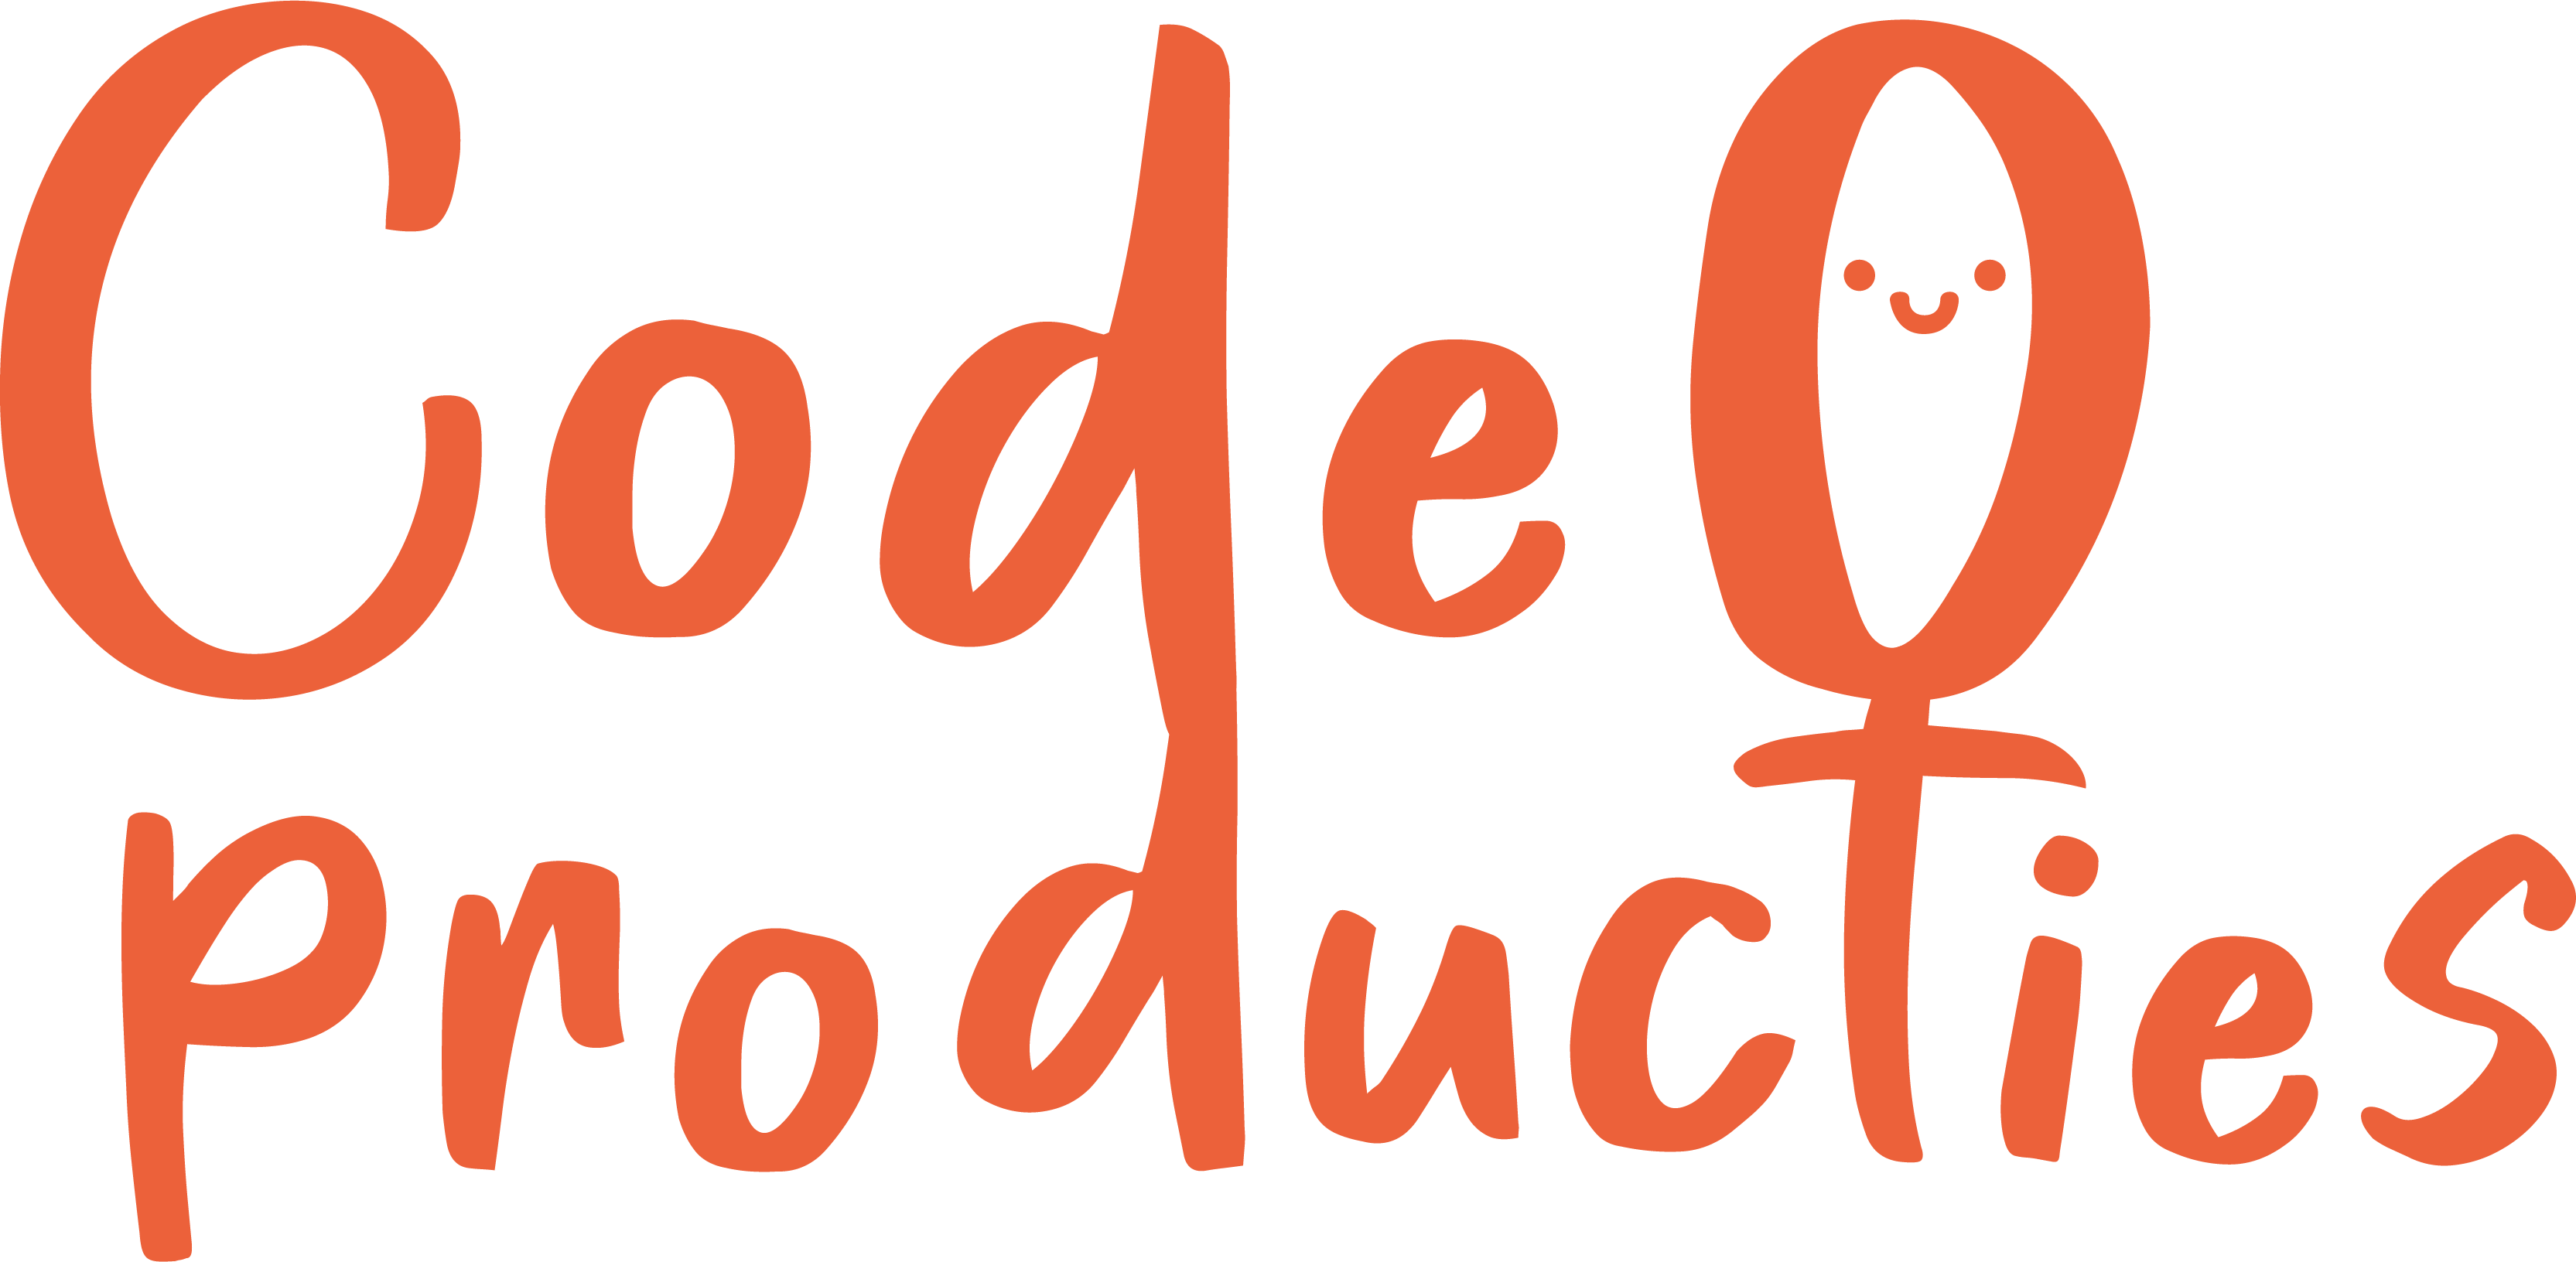 Code 0 Producties